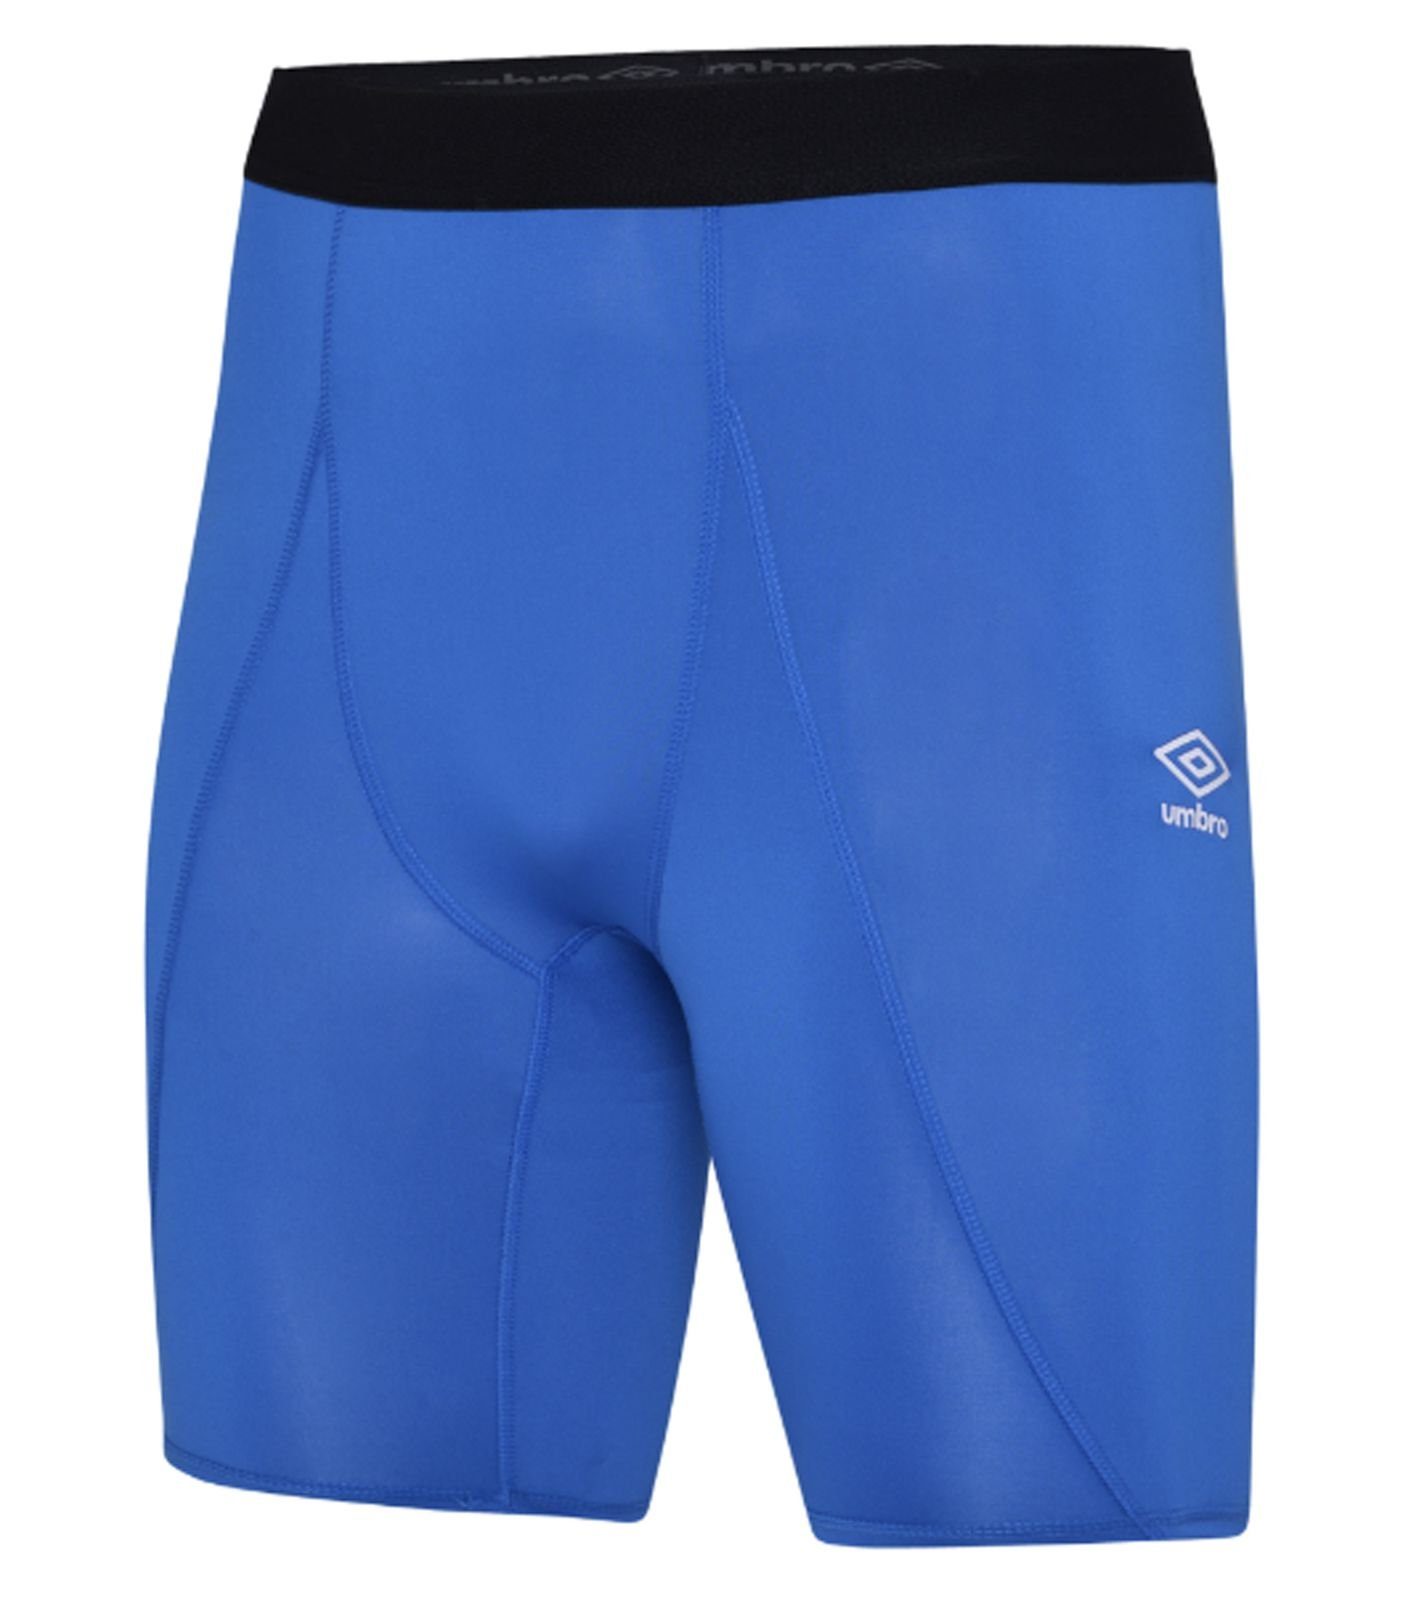 Short Power 64704U-EH2 Shorts Umbro Core umbro Rad-Hose Blau Herren Sport-Shorts bequeme Funktions-Hose